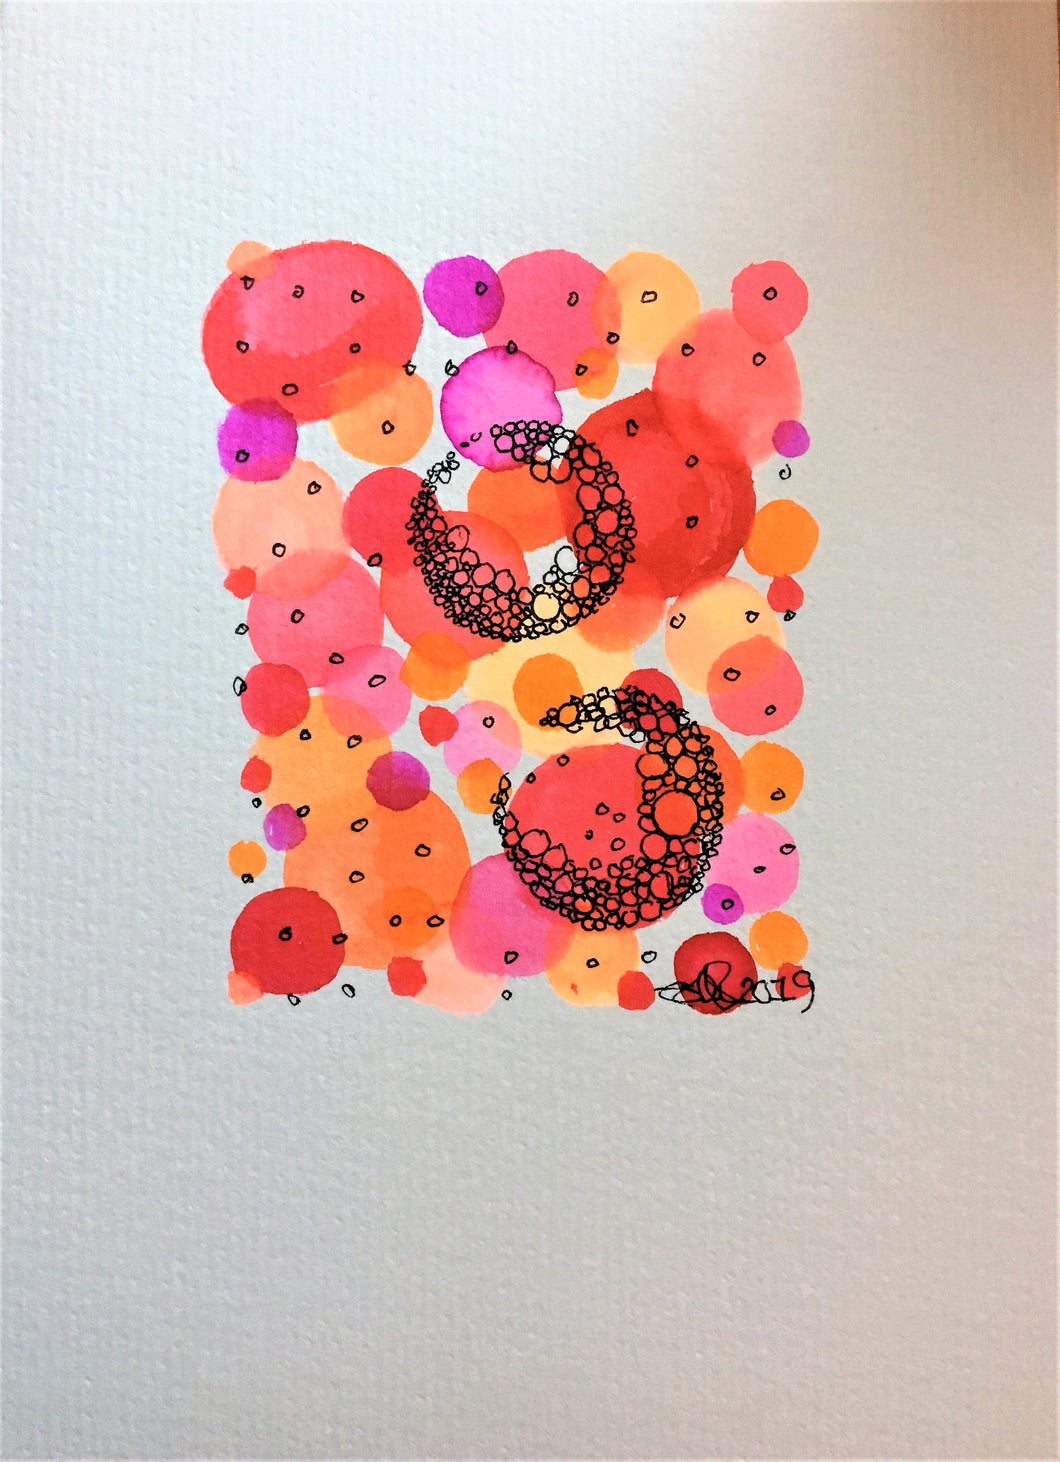 Handpainted Watercolour Greeting Card - Red/Pink/Orange Circles with Circle Design - eDgE dEsiGn London